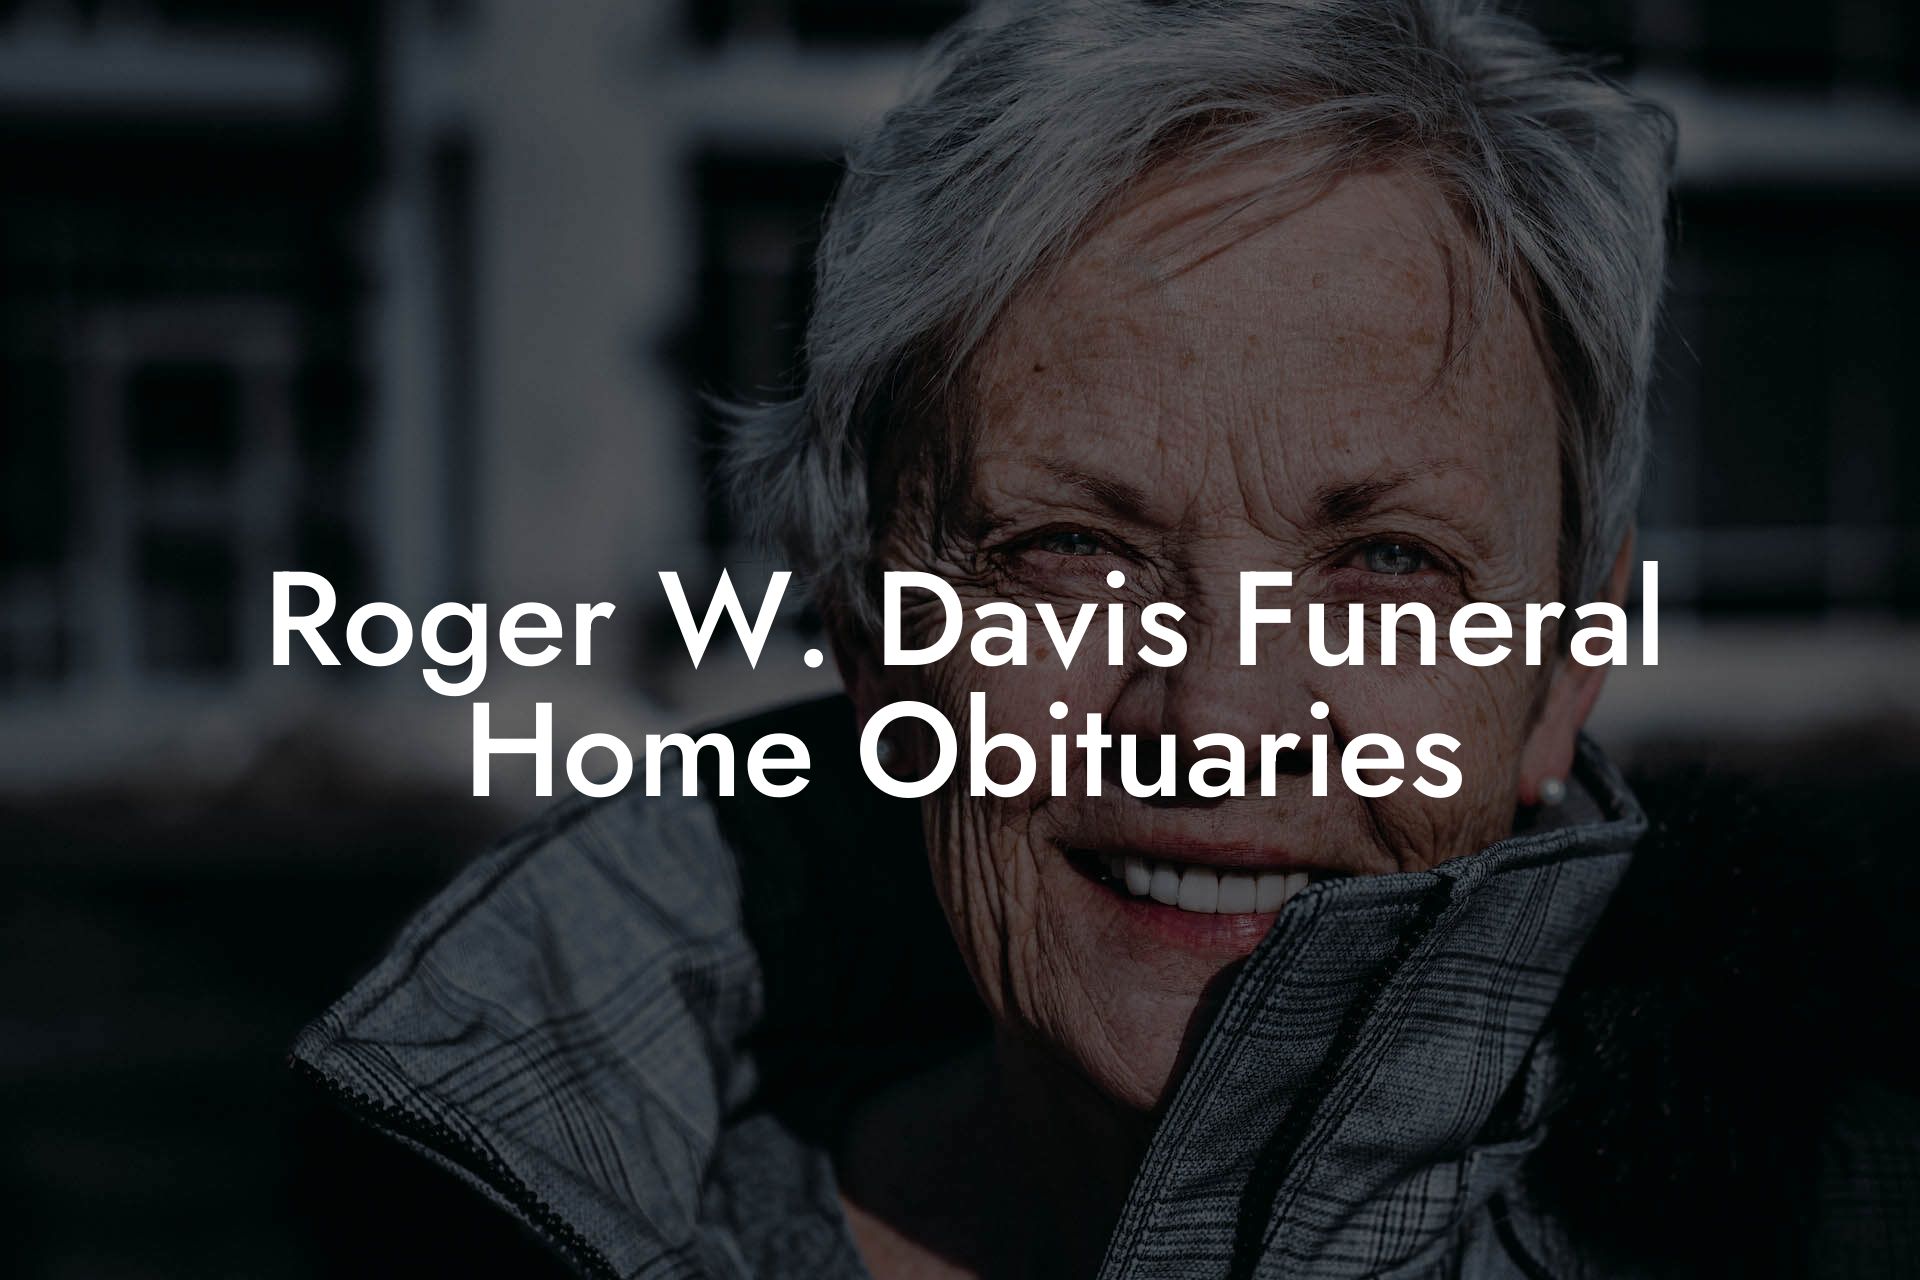 Roger W. Davis Funeral Home Obituaries